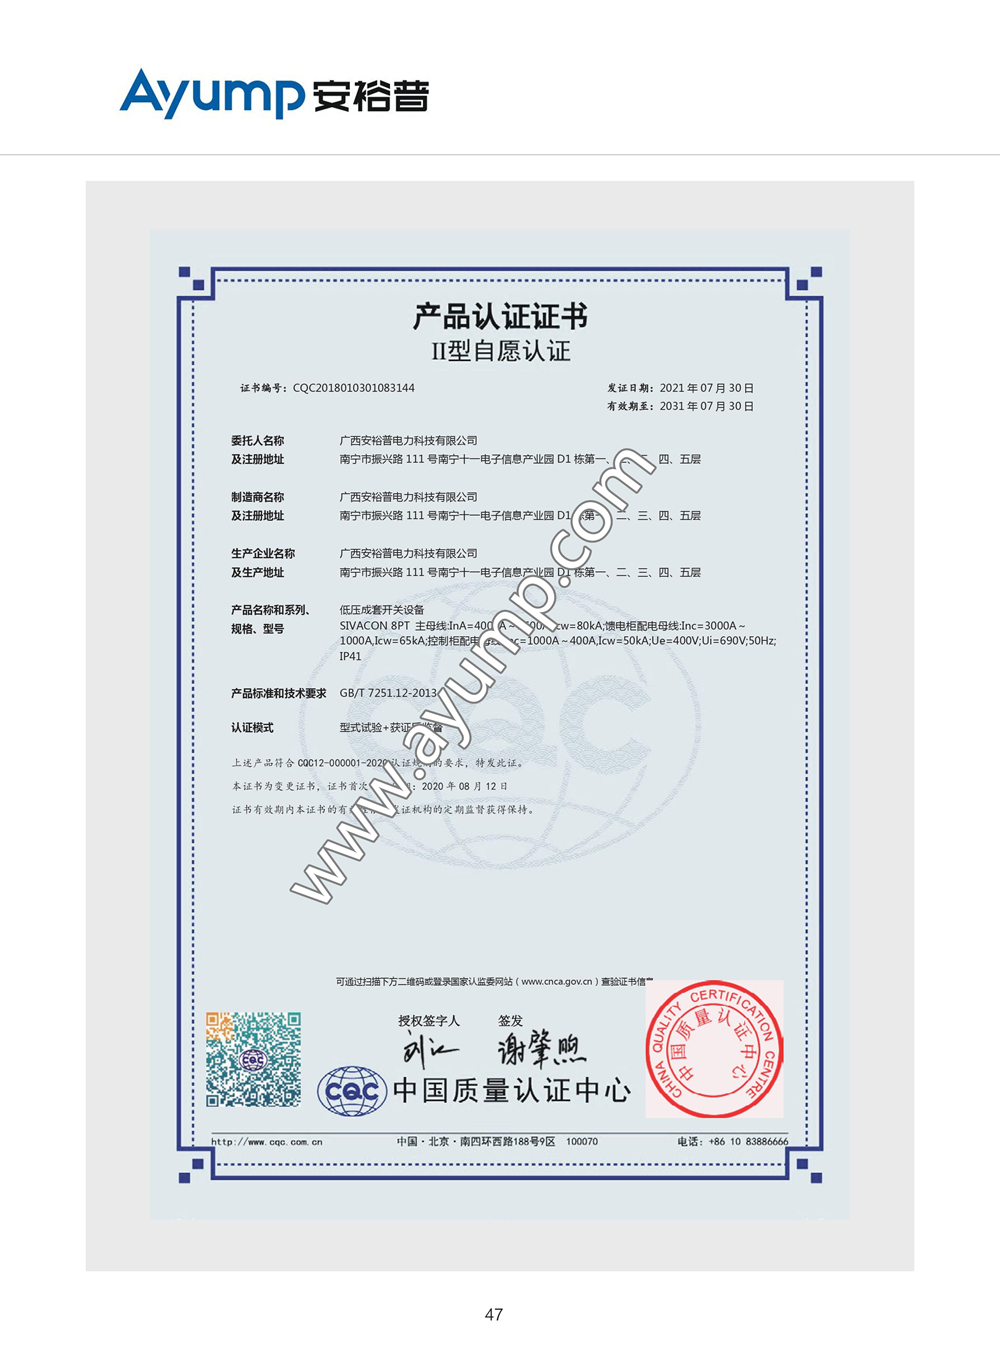 8PT低壓成套開關設備國家強制性產品認證證書Ⅱ型自愿認證